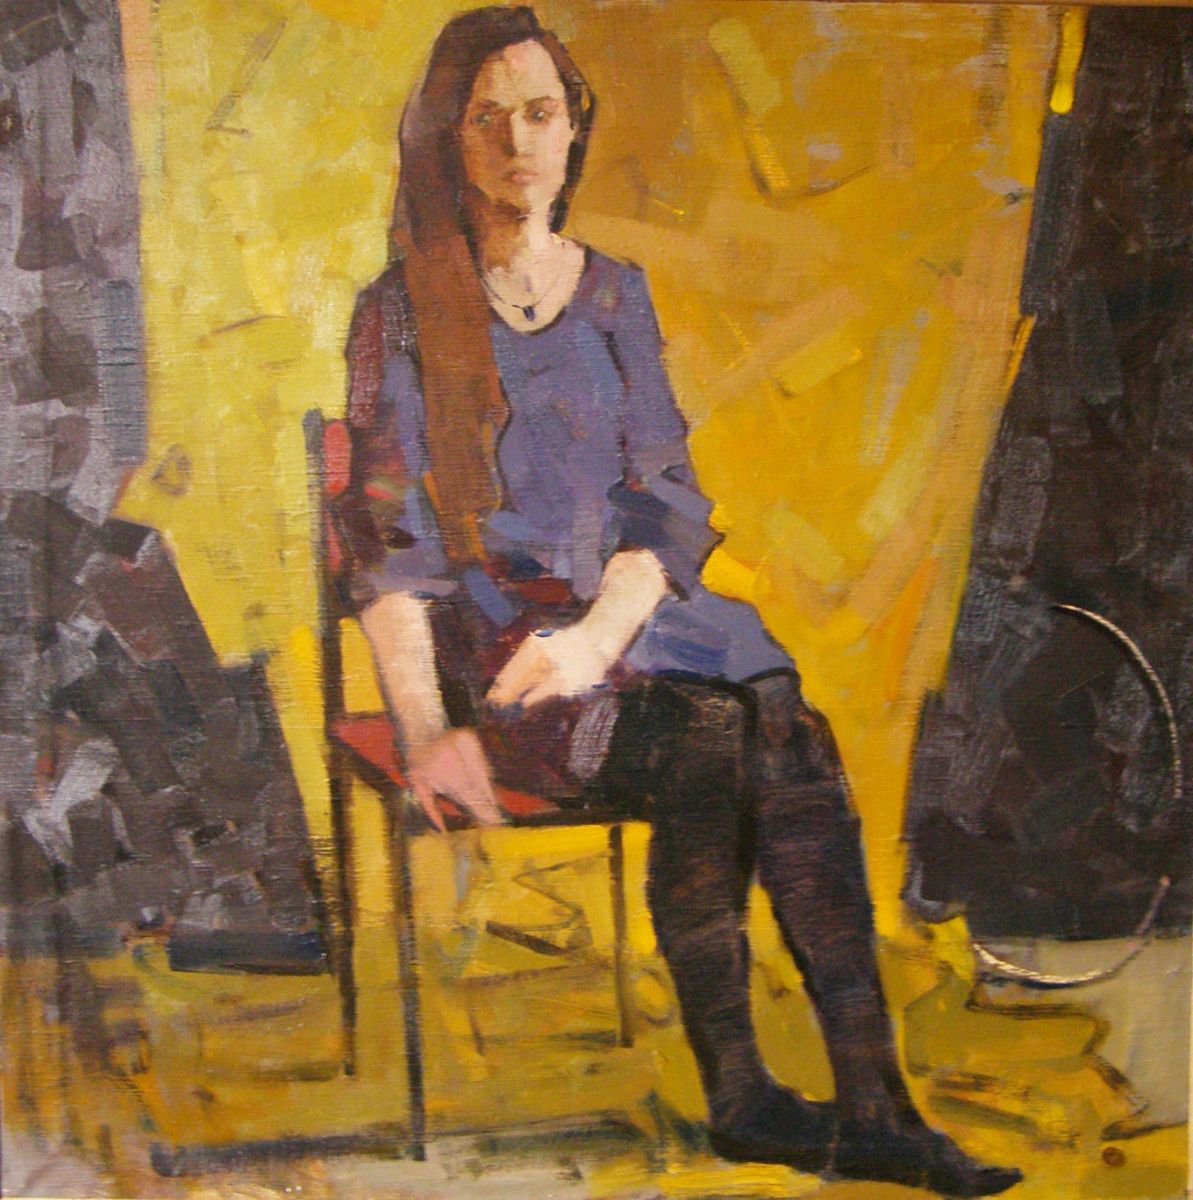 Sitting figure. 2014. oil on canvas. 90x90cm. by Igor (Krapar) Shcherbakov